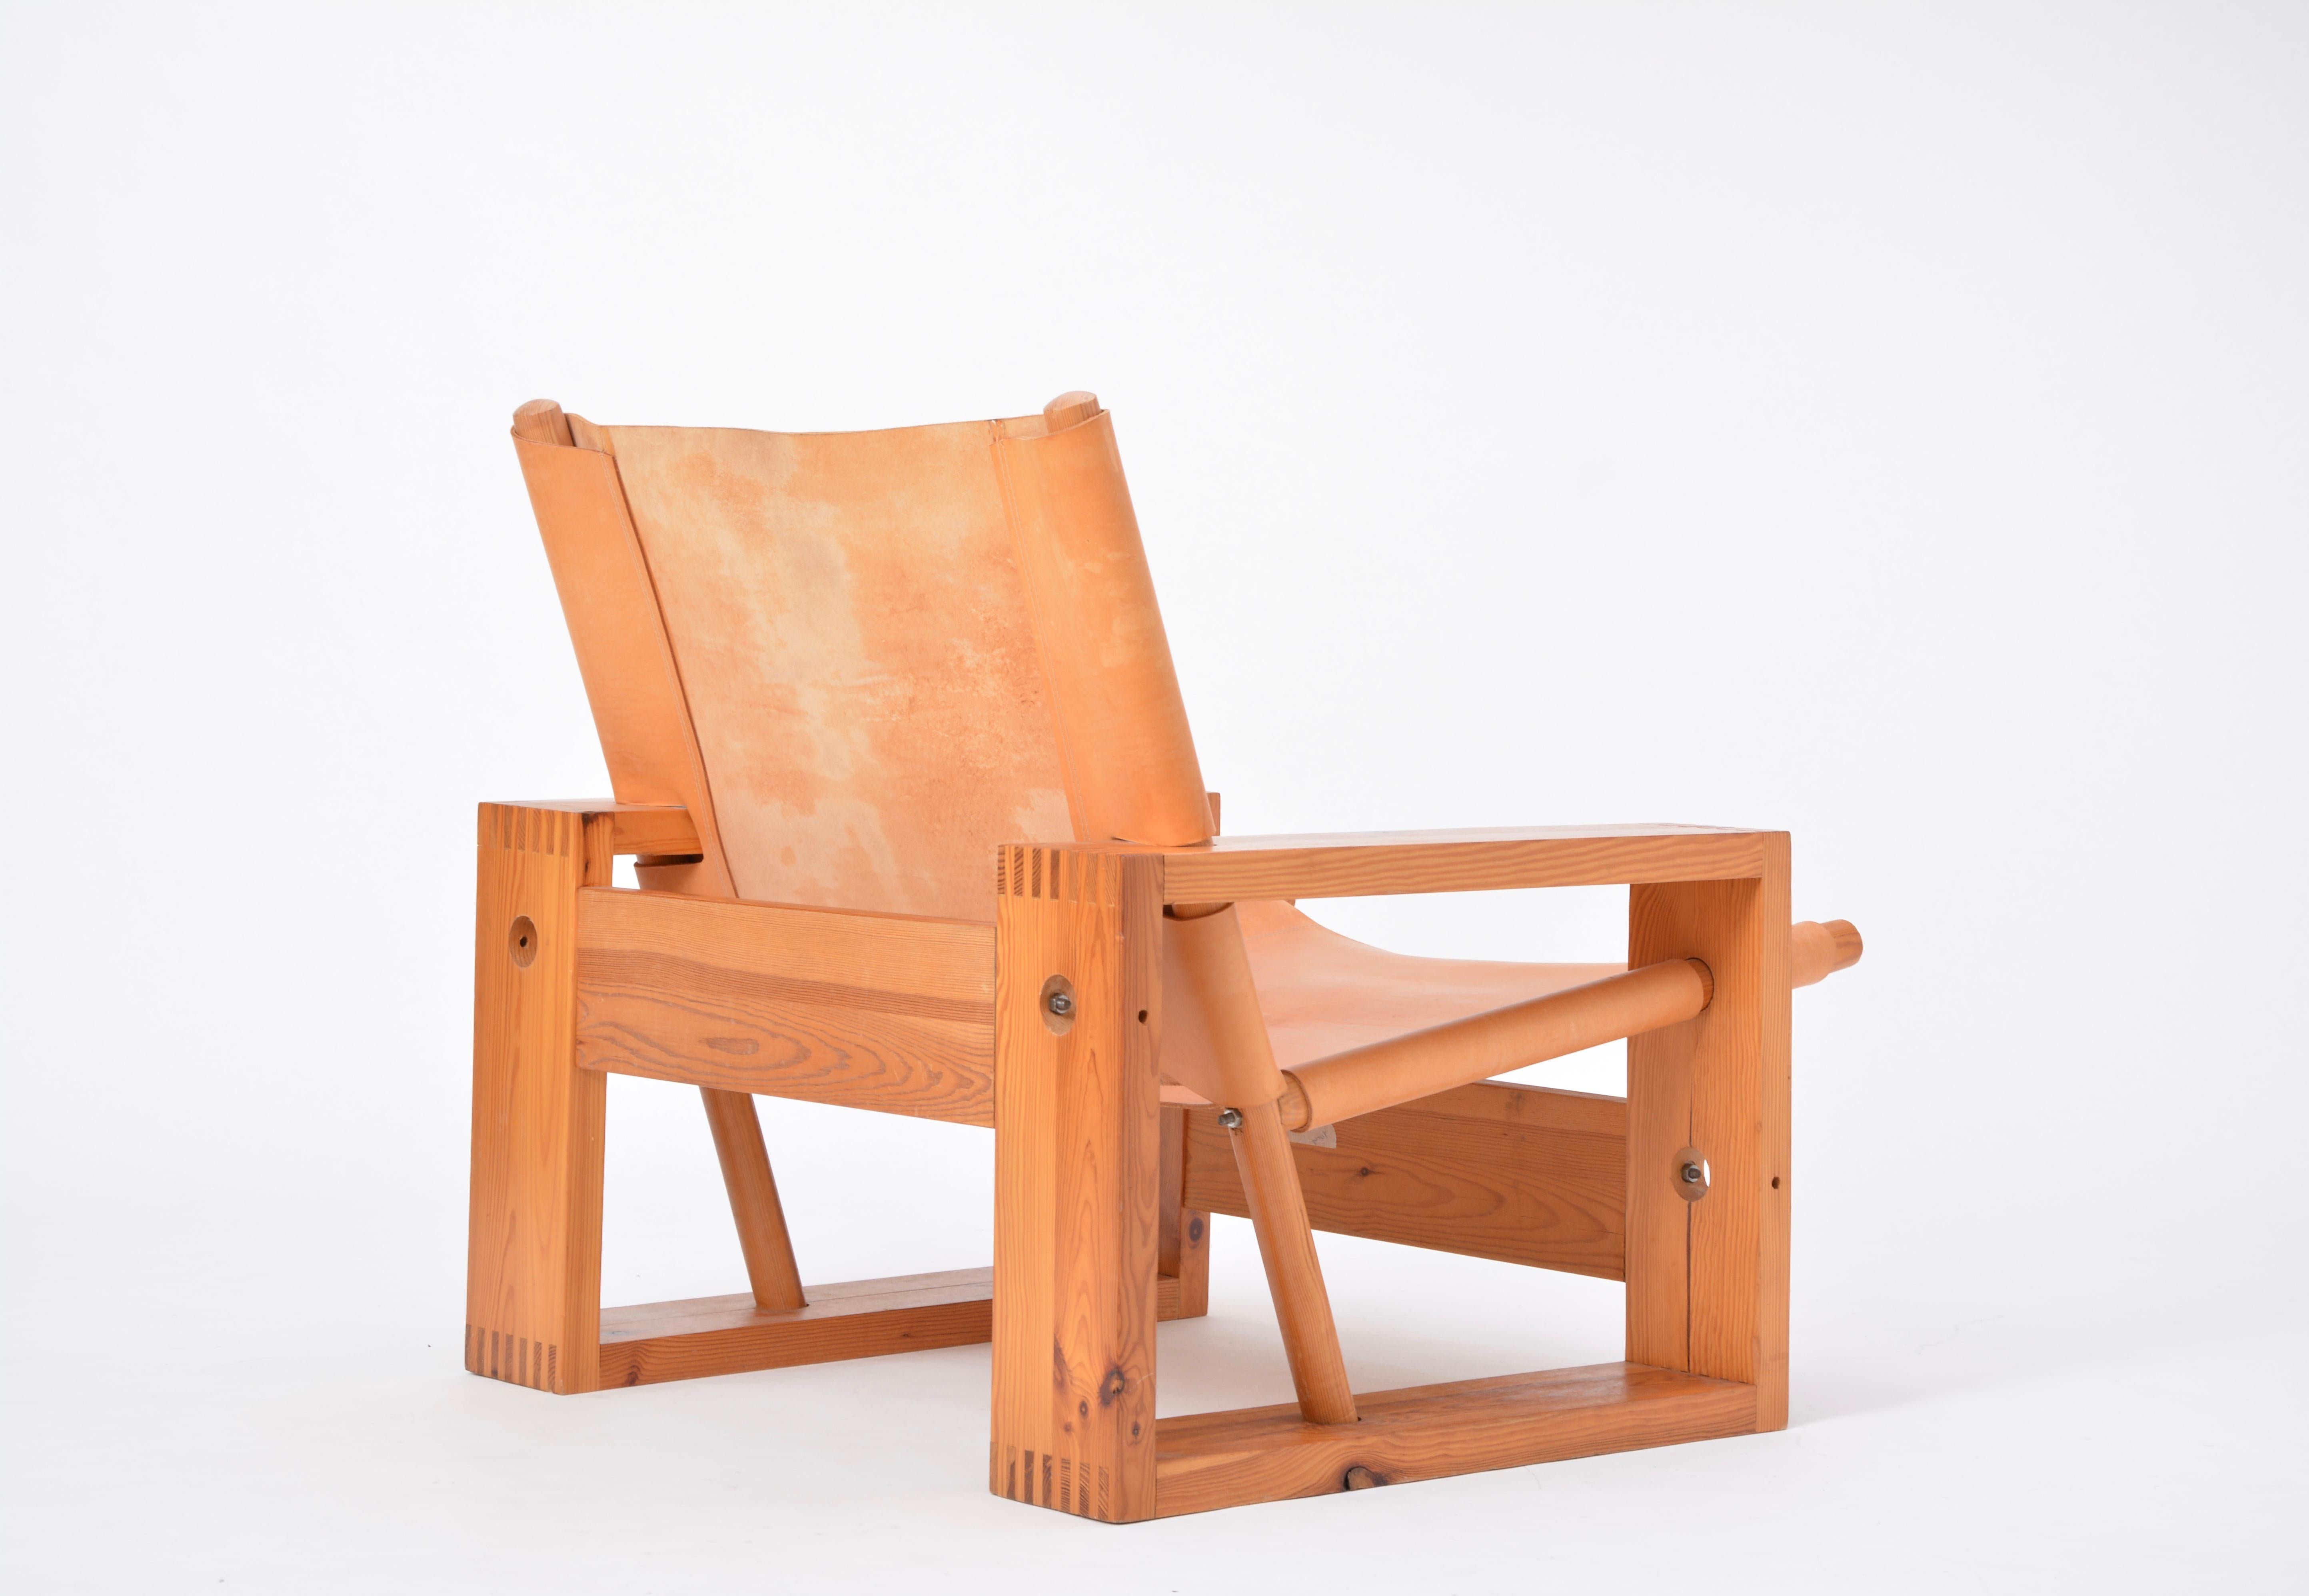 20th Century Dutch Mid-Century Modern Easy Chair designed by Ate Van Apeldoorn